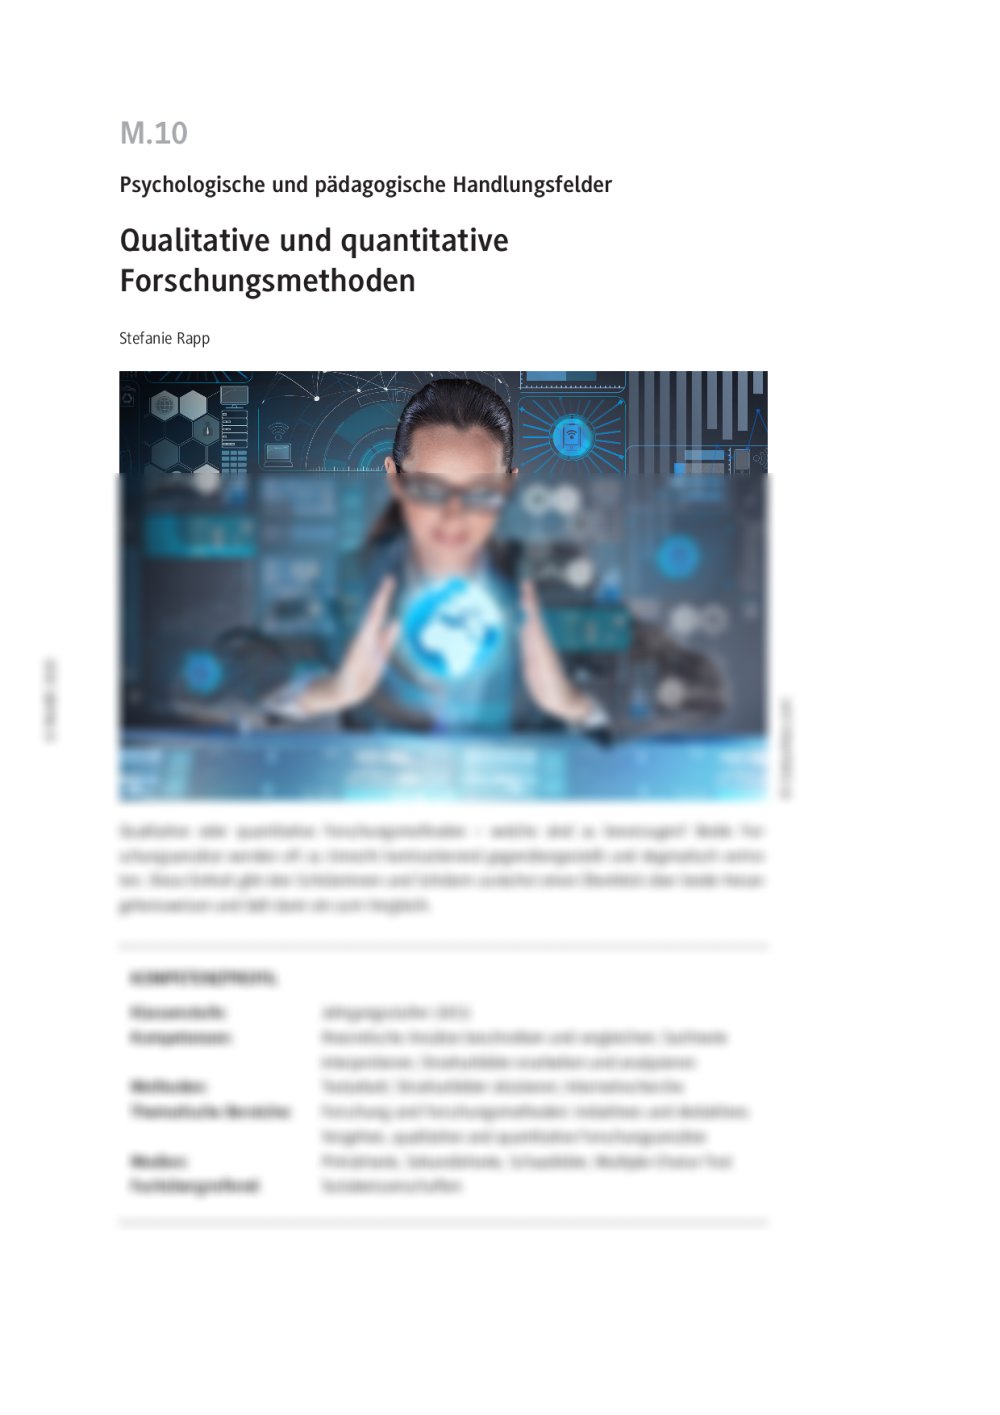 Qualitative und quantitative Forschungsmethoden - Seite 1